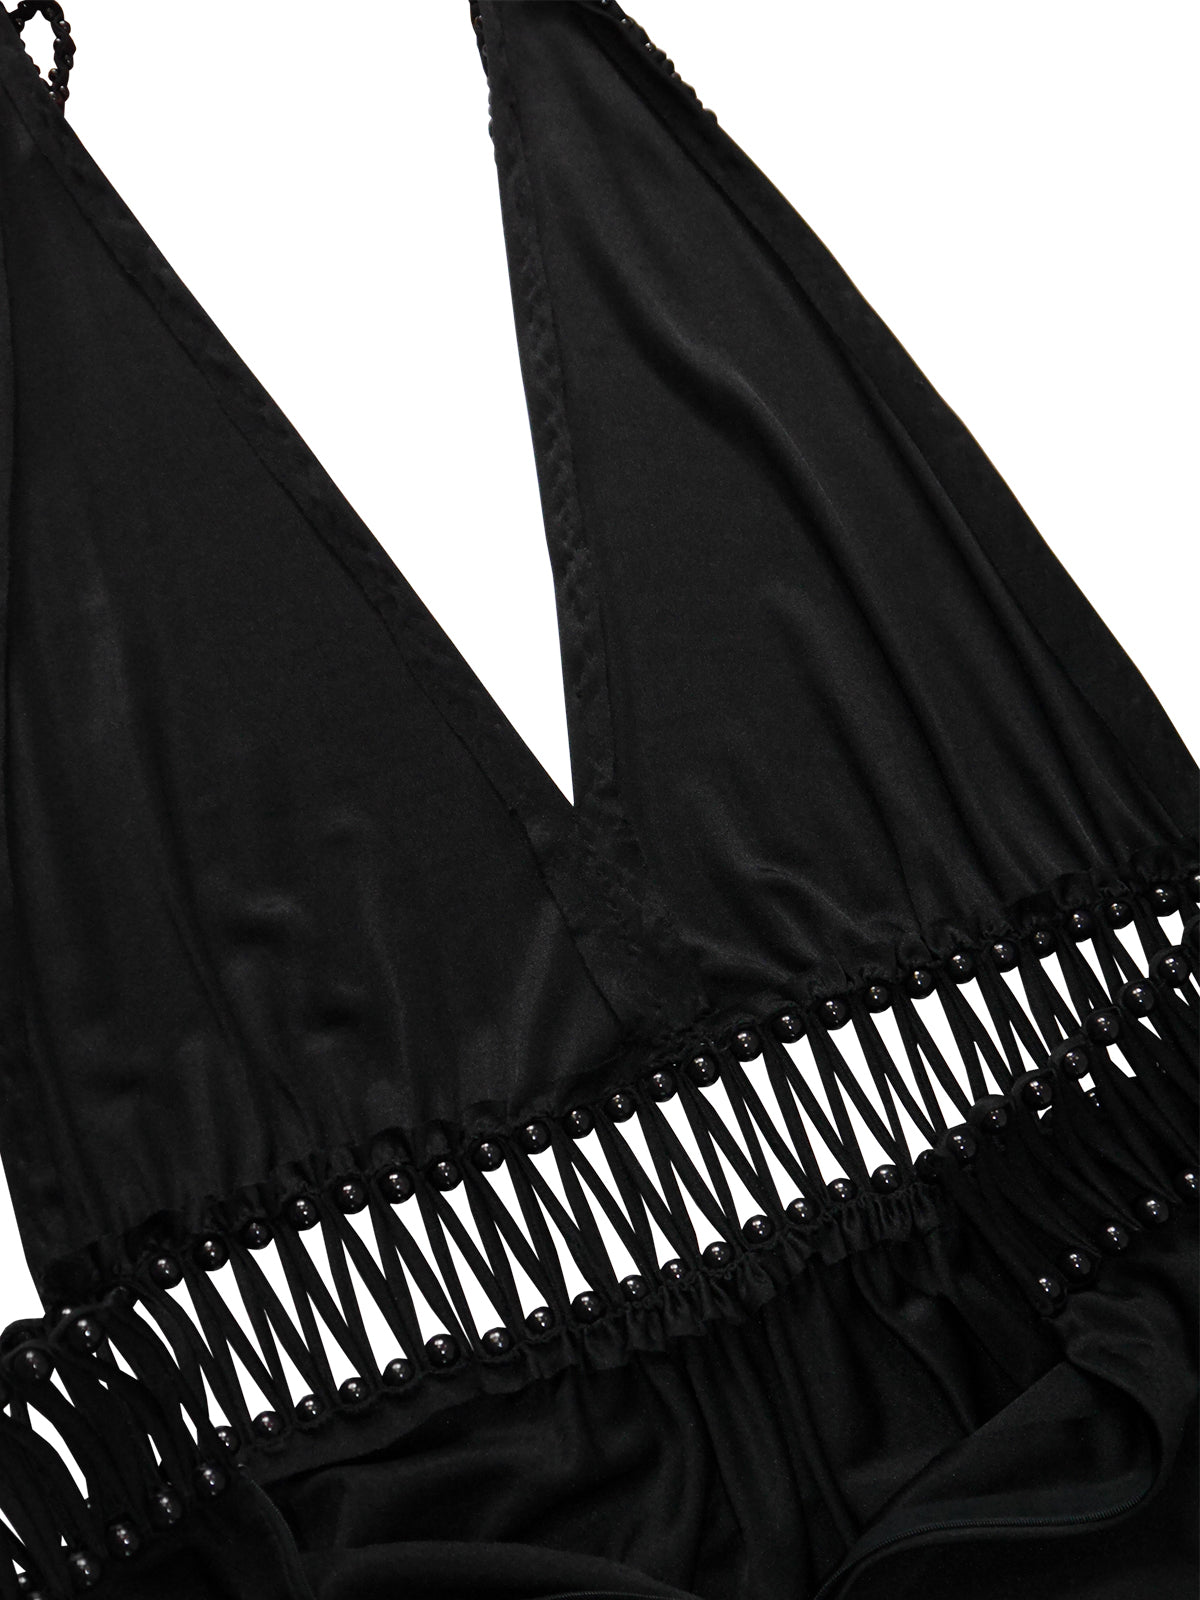 LORIS AZZARO 1970s Vintage Beaded Backless Black Jersey Maxi Evening Dress